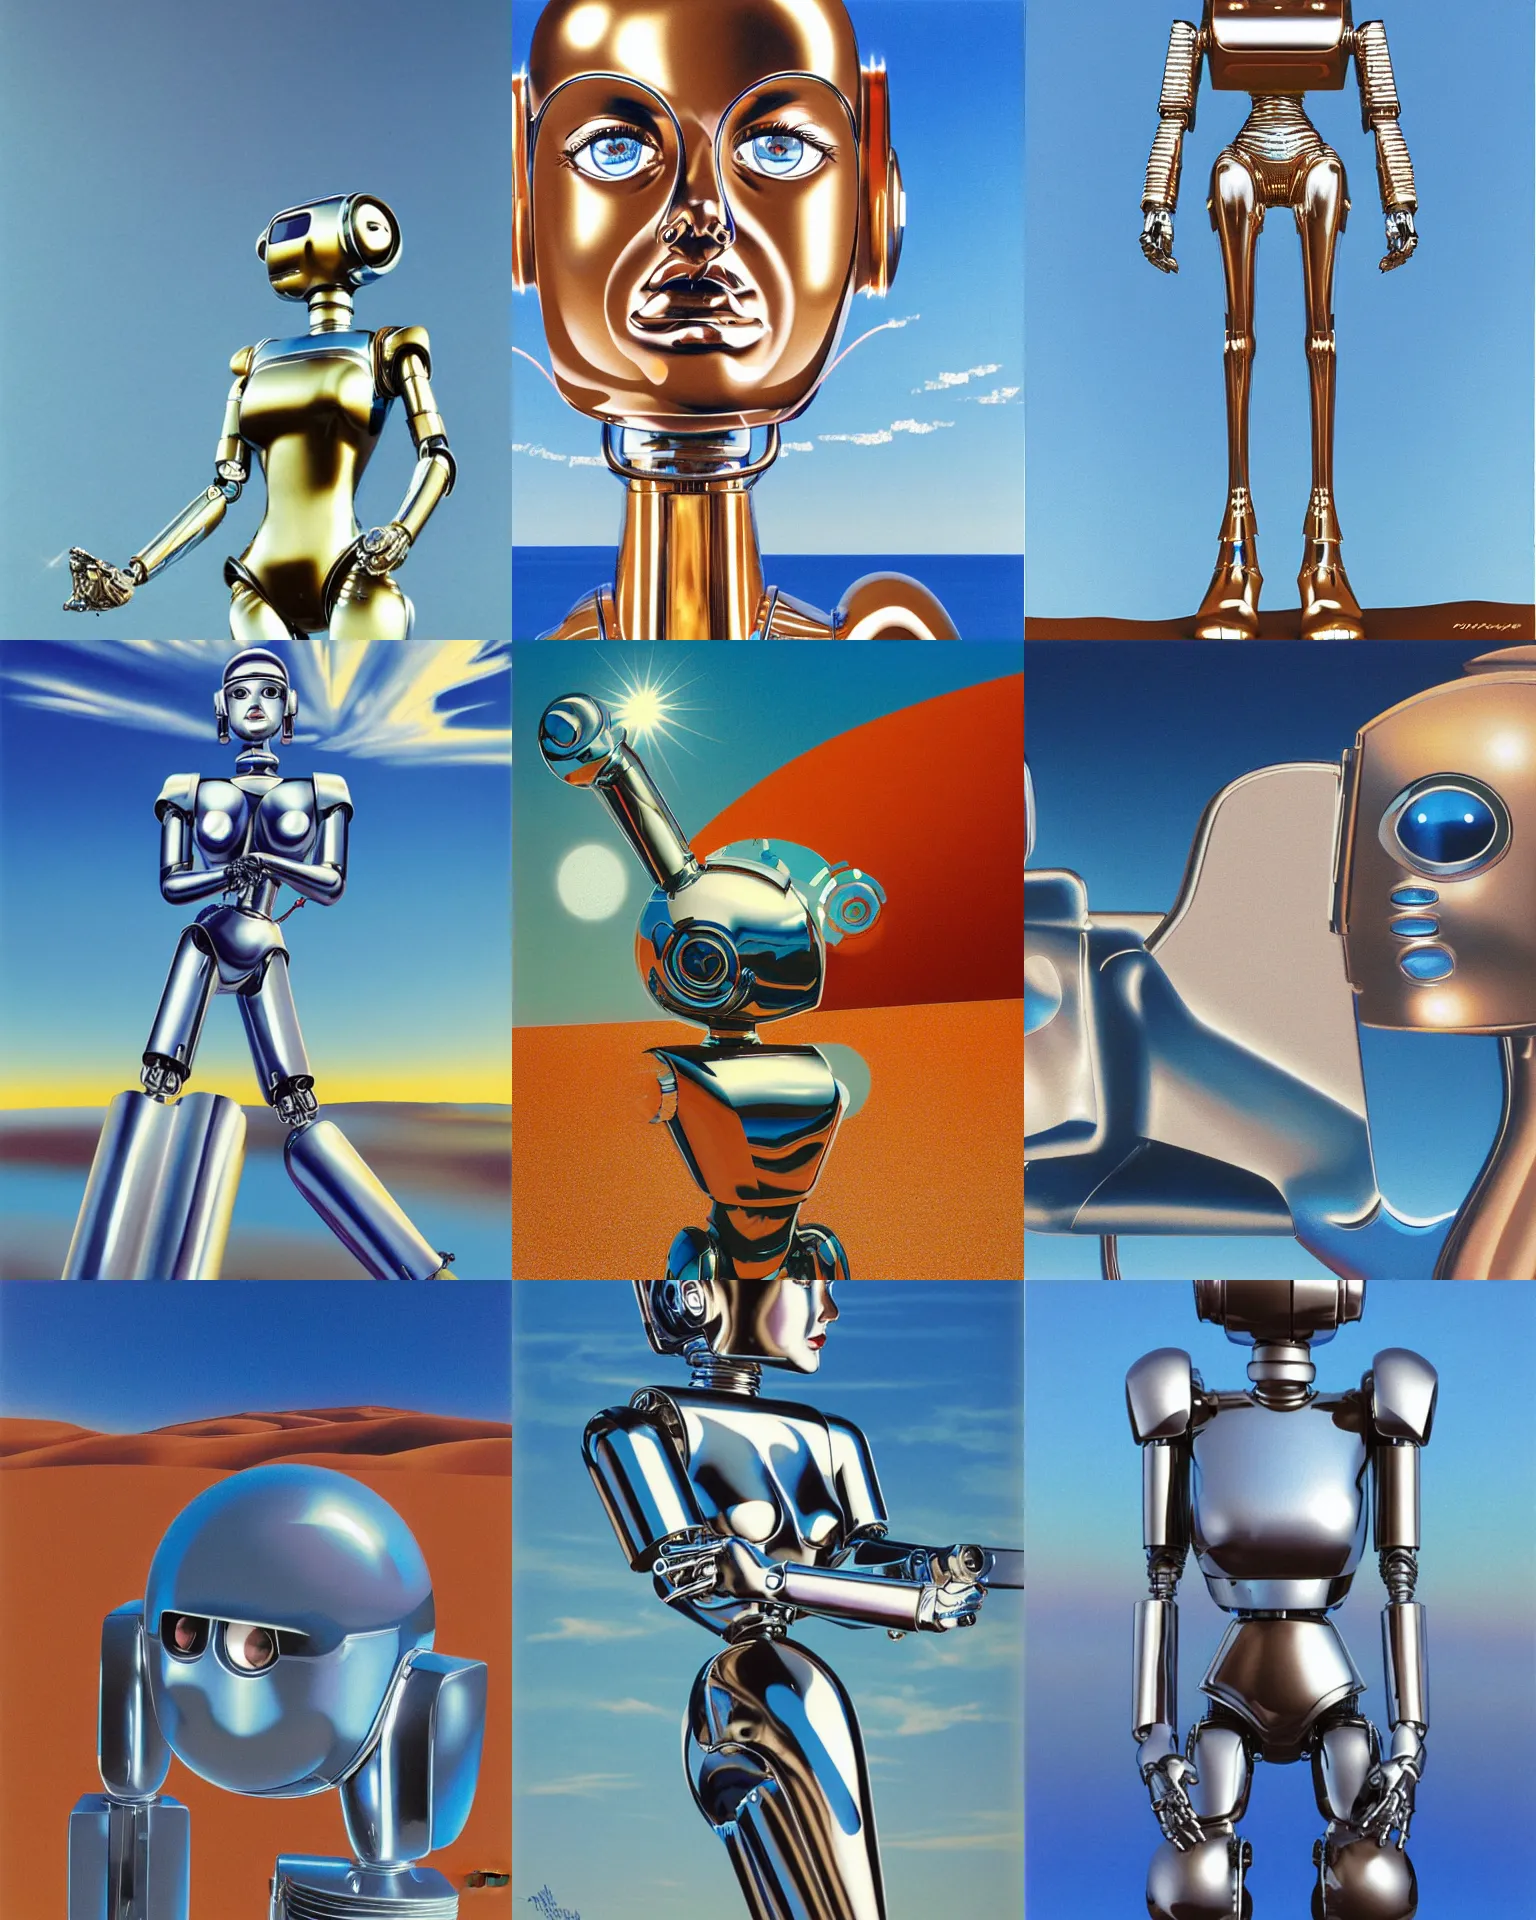 Prompt: chrome robot mary louise, chrome reflecting desert and blue sky, chrome bob haircut, airbrush art by hajime sorayama, 1 9 8 0 s